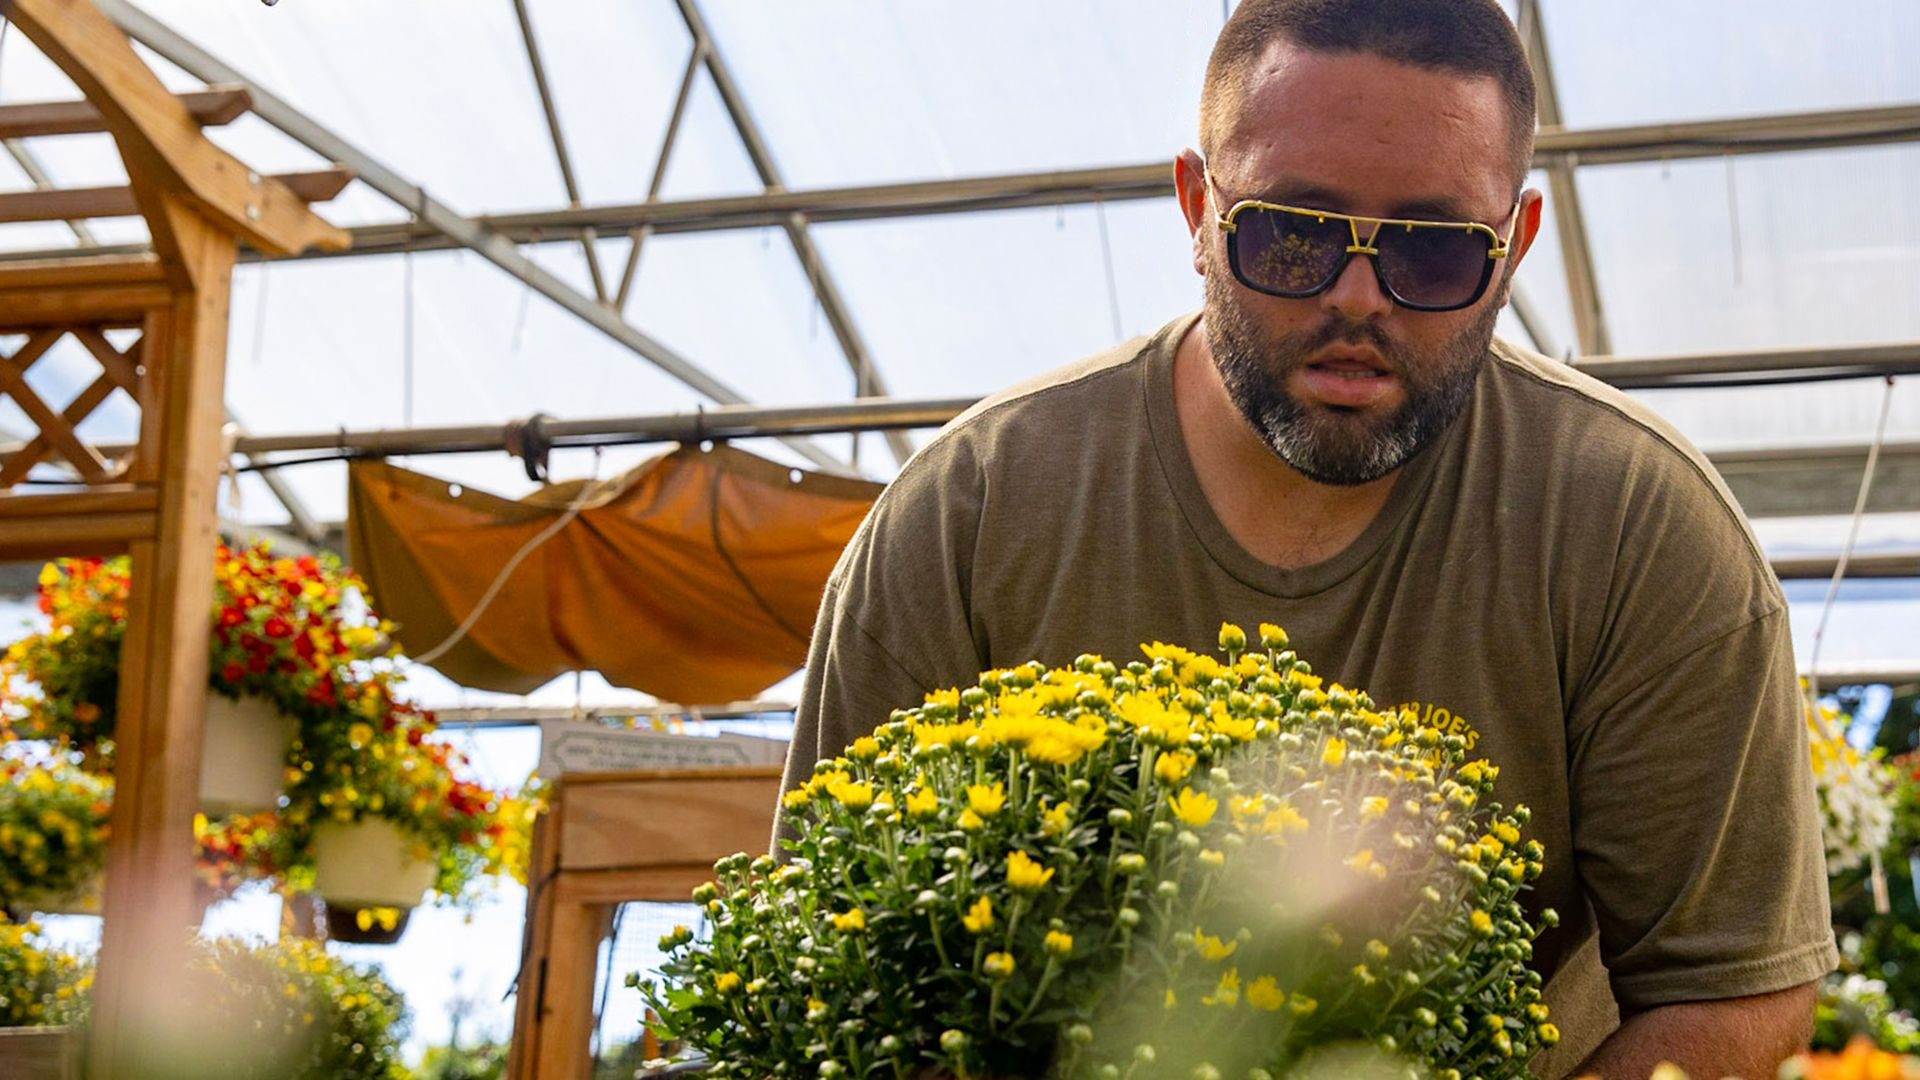 Man wearing sunglasses in greenhouse carefully handling yellow flowers.